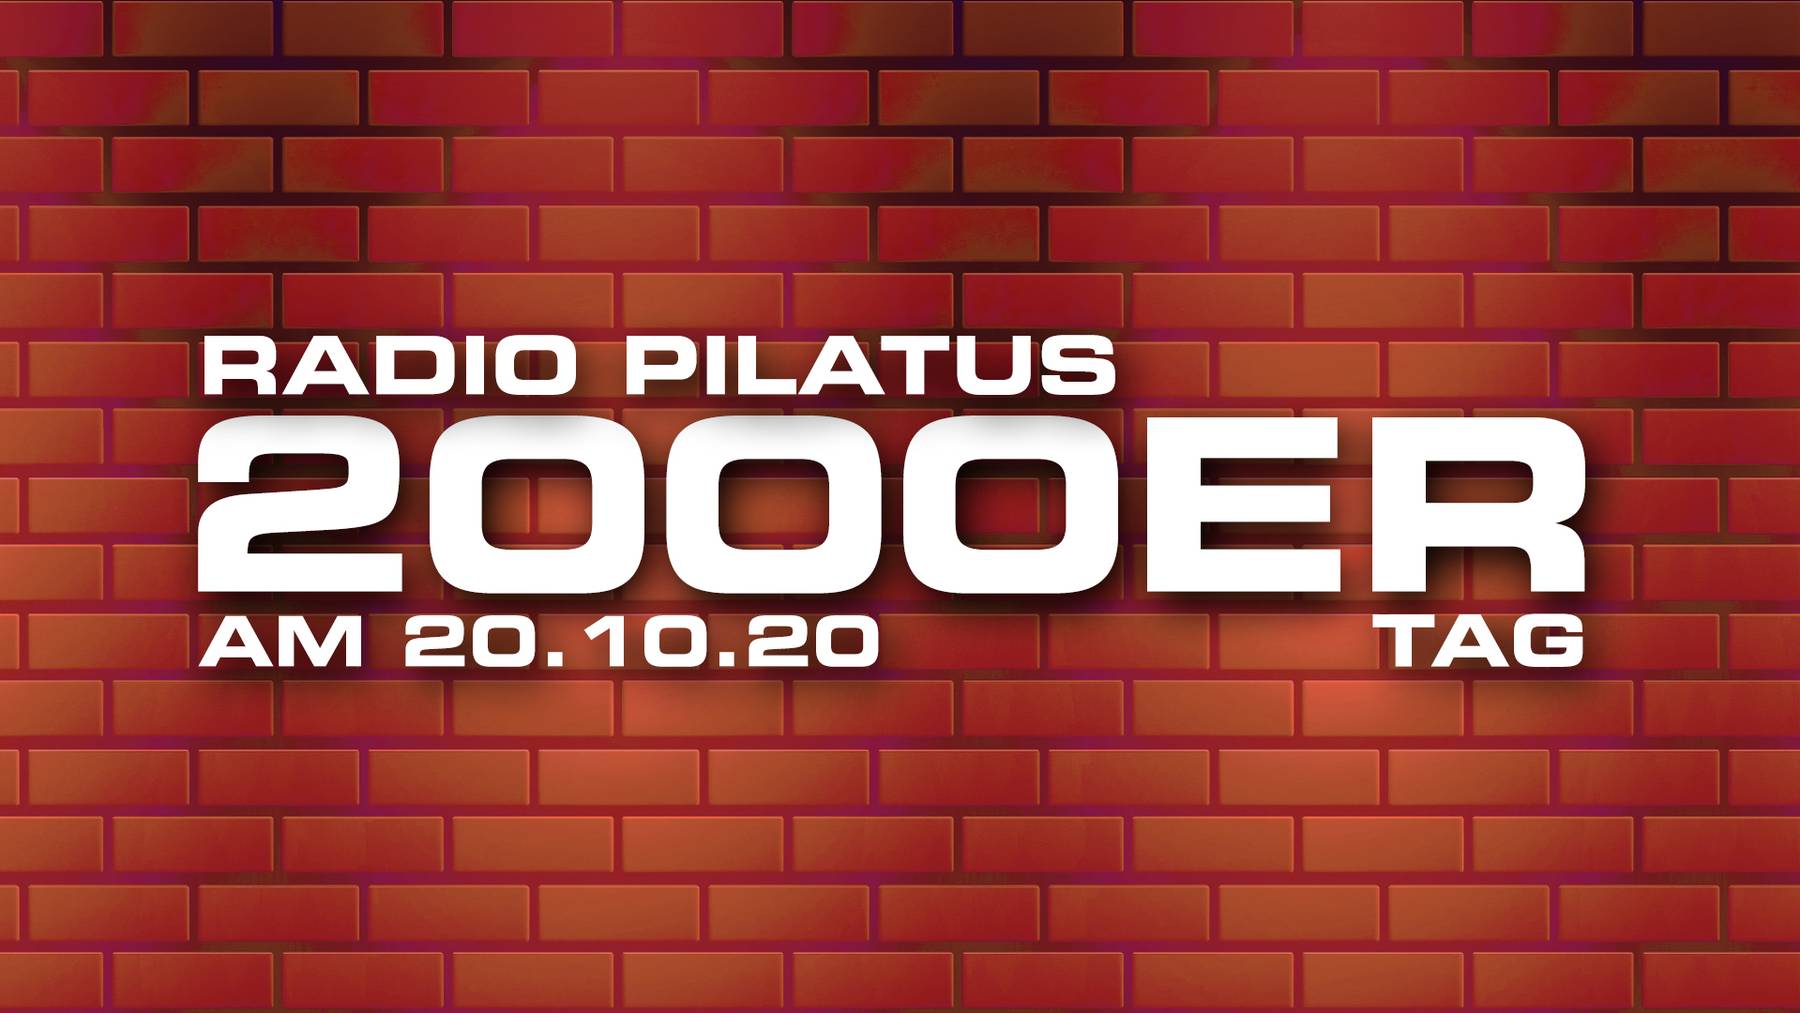 Radio Pilatus 2000er Tag